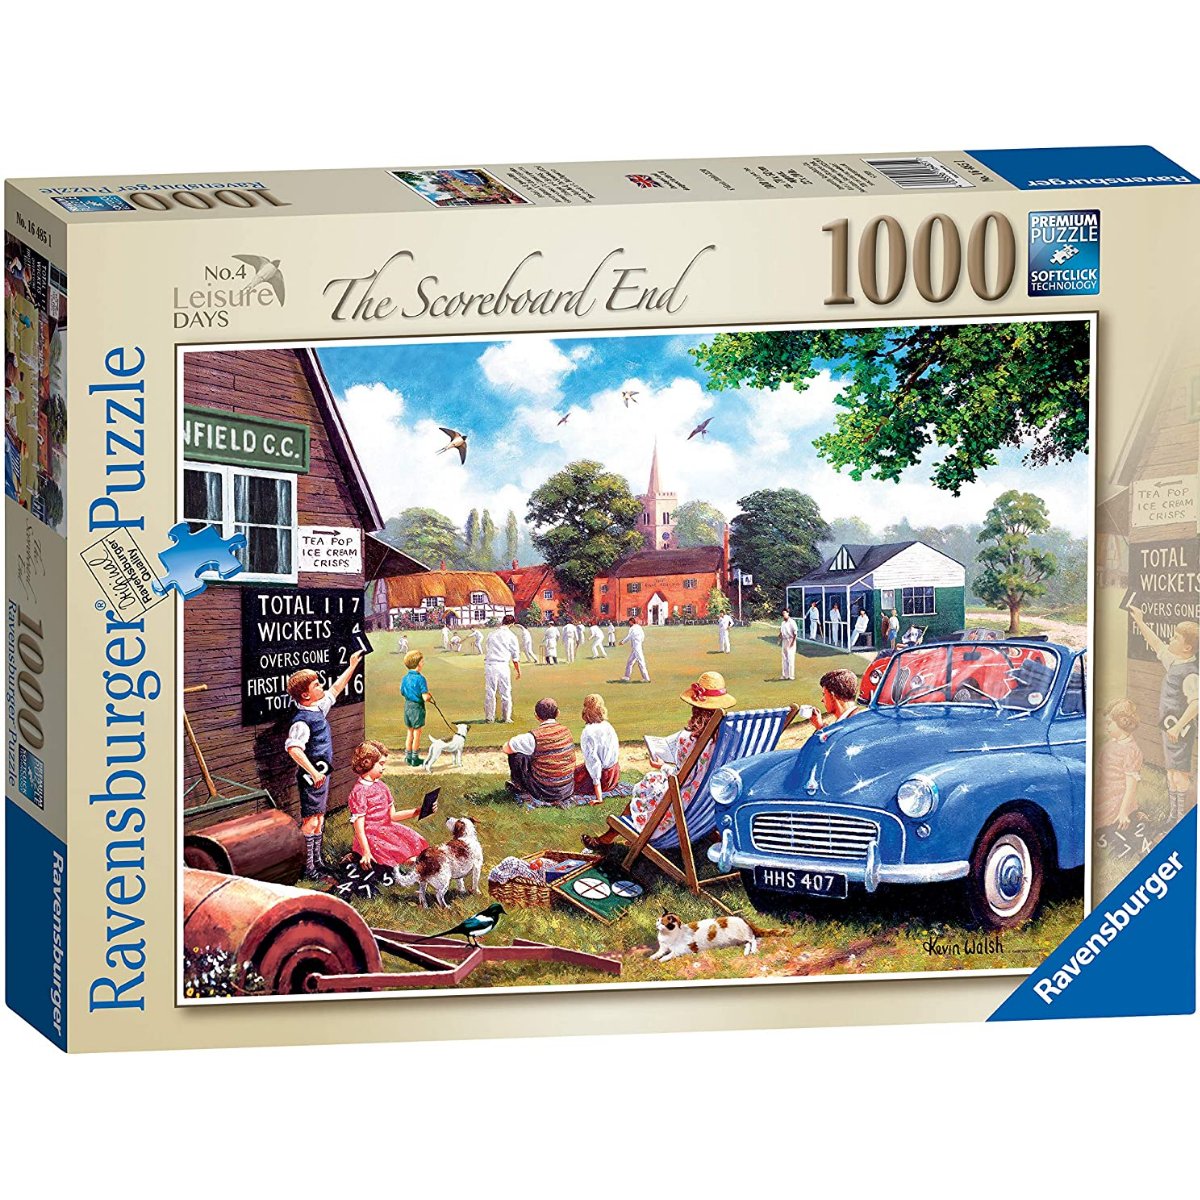 Ravensburger The Scoreboard End Jigsaw Puzzle (1000 Pieces) - Phillips Hobbies